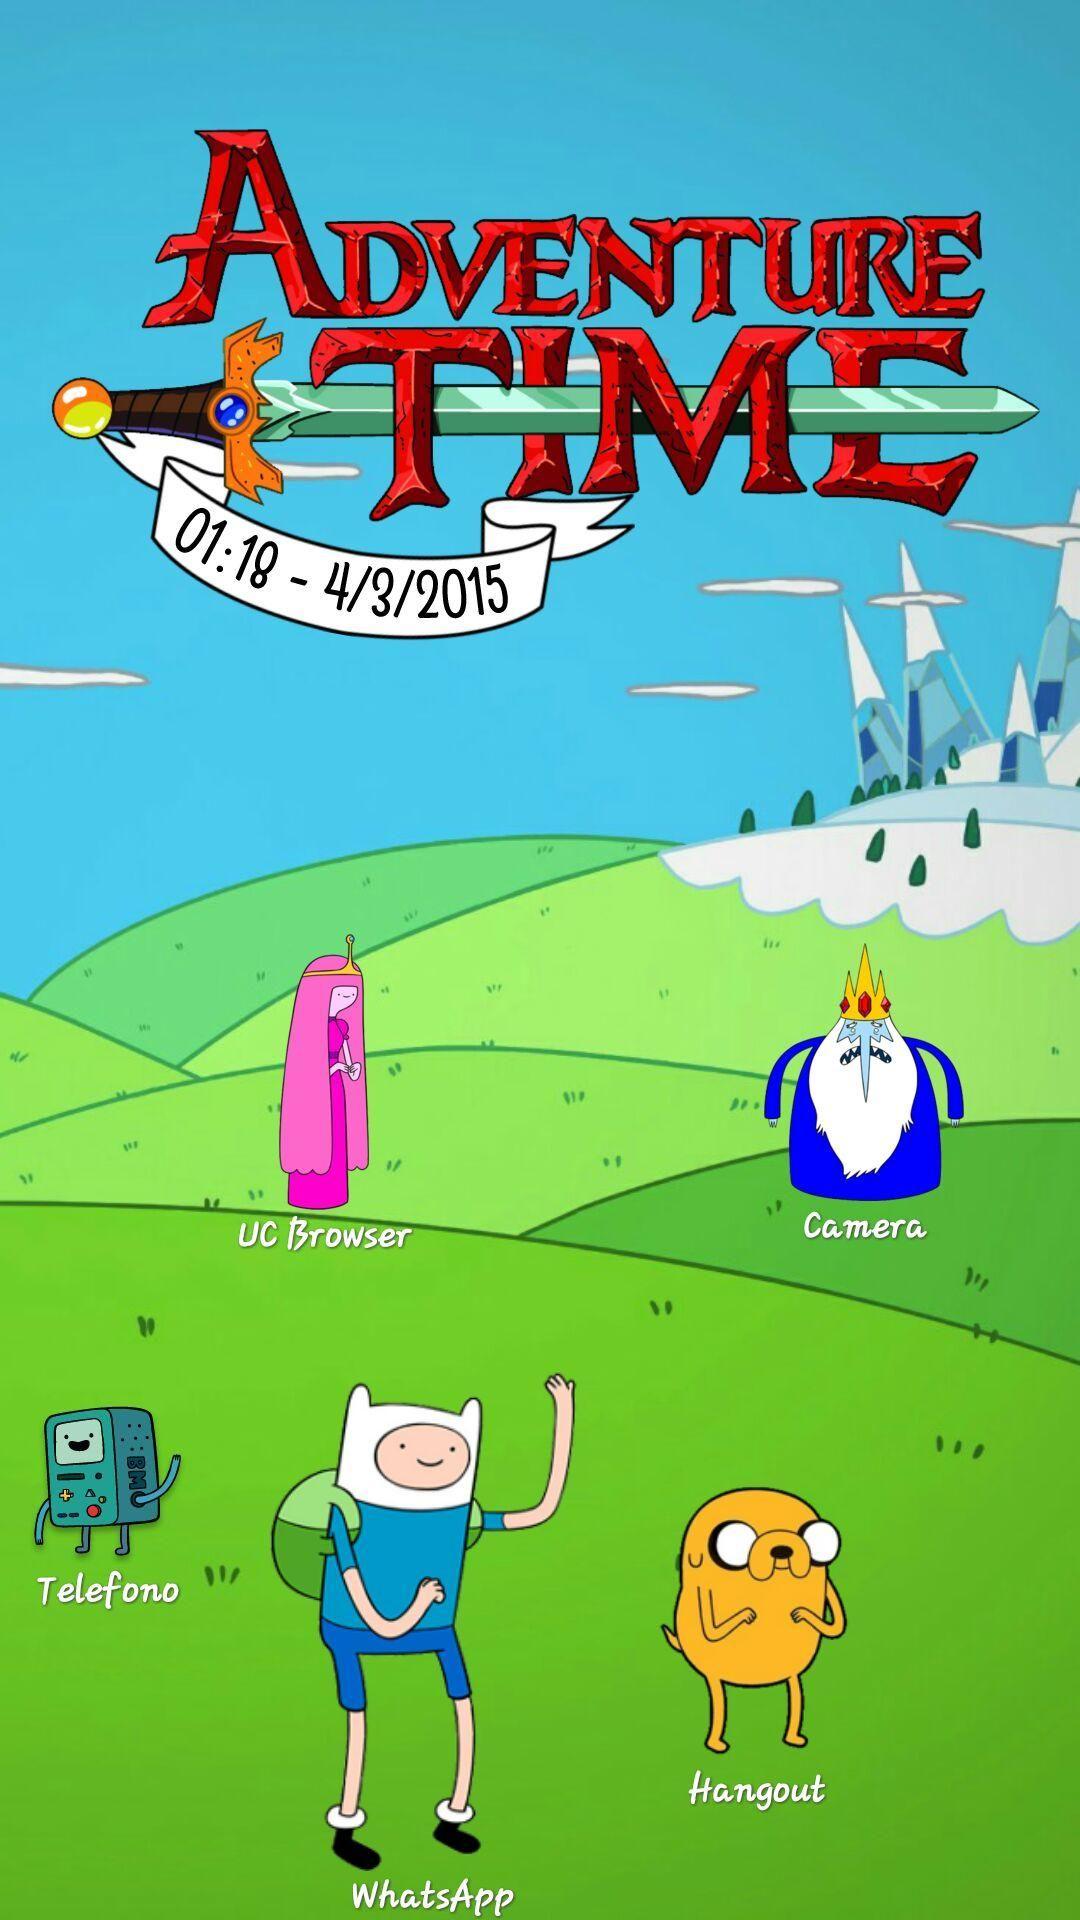 Adventure Time Mobile Wallpaper: Image